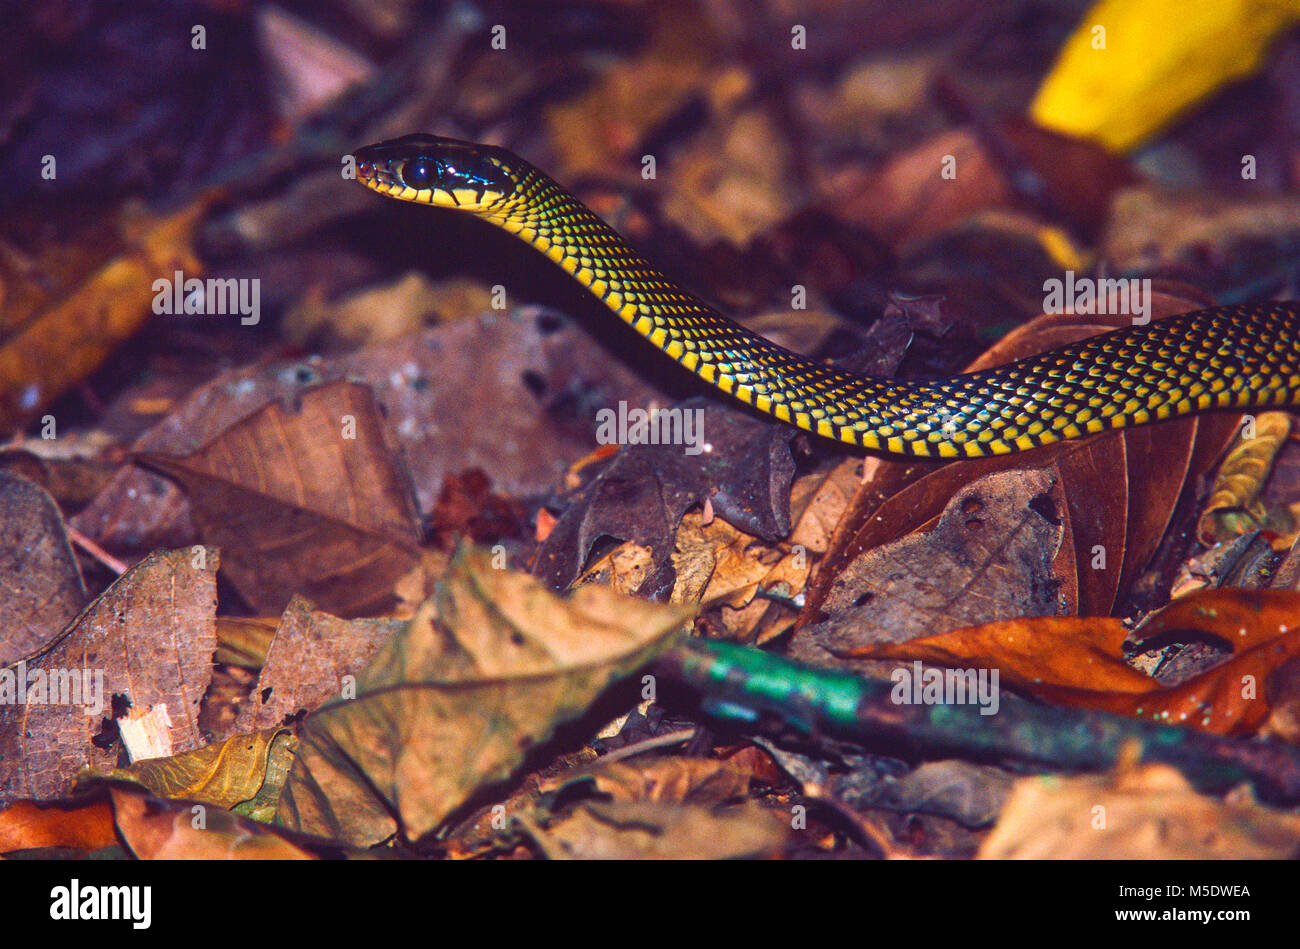 Racer, moteado Dryombius margaritiferus, Colubridae, serpientes, reptiles, animales, Costa Rica Foto de stock